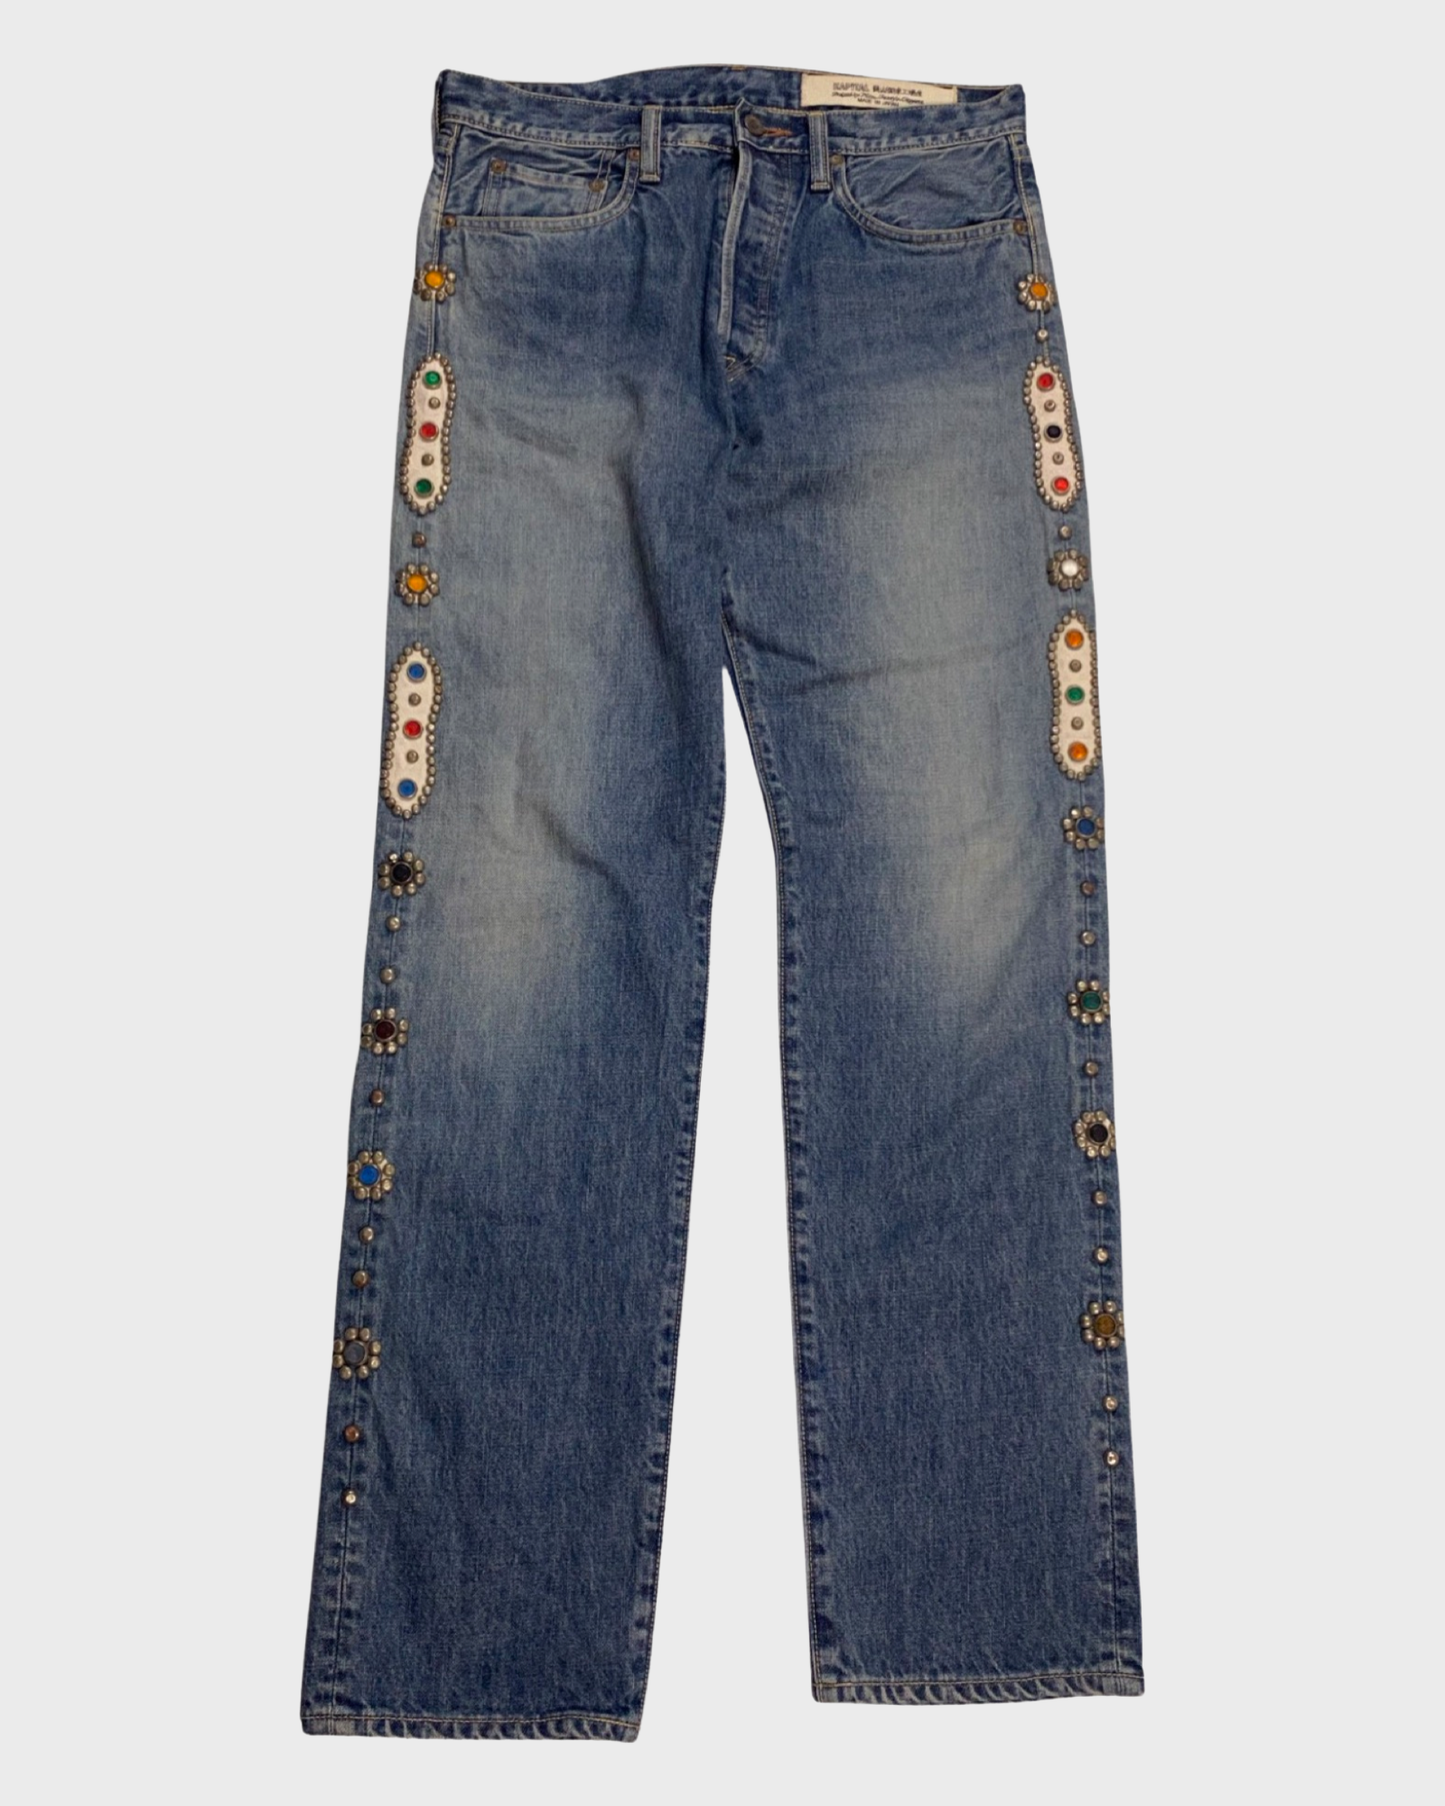 Kapital Kountry Gemstone Jewels Jeans Denim Pants in blue SZ:W32